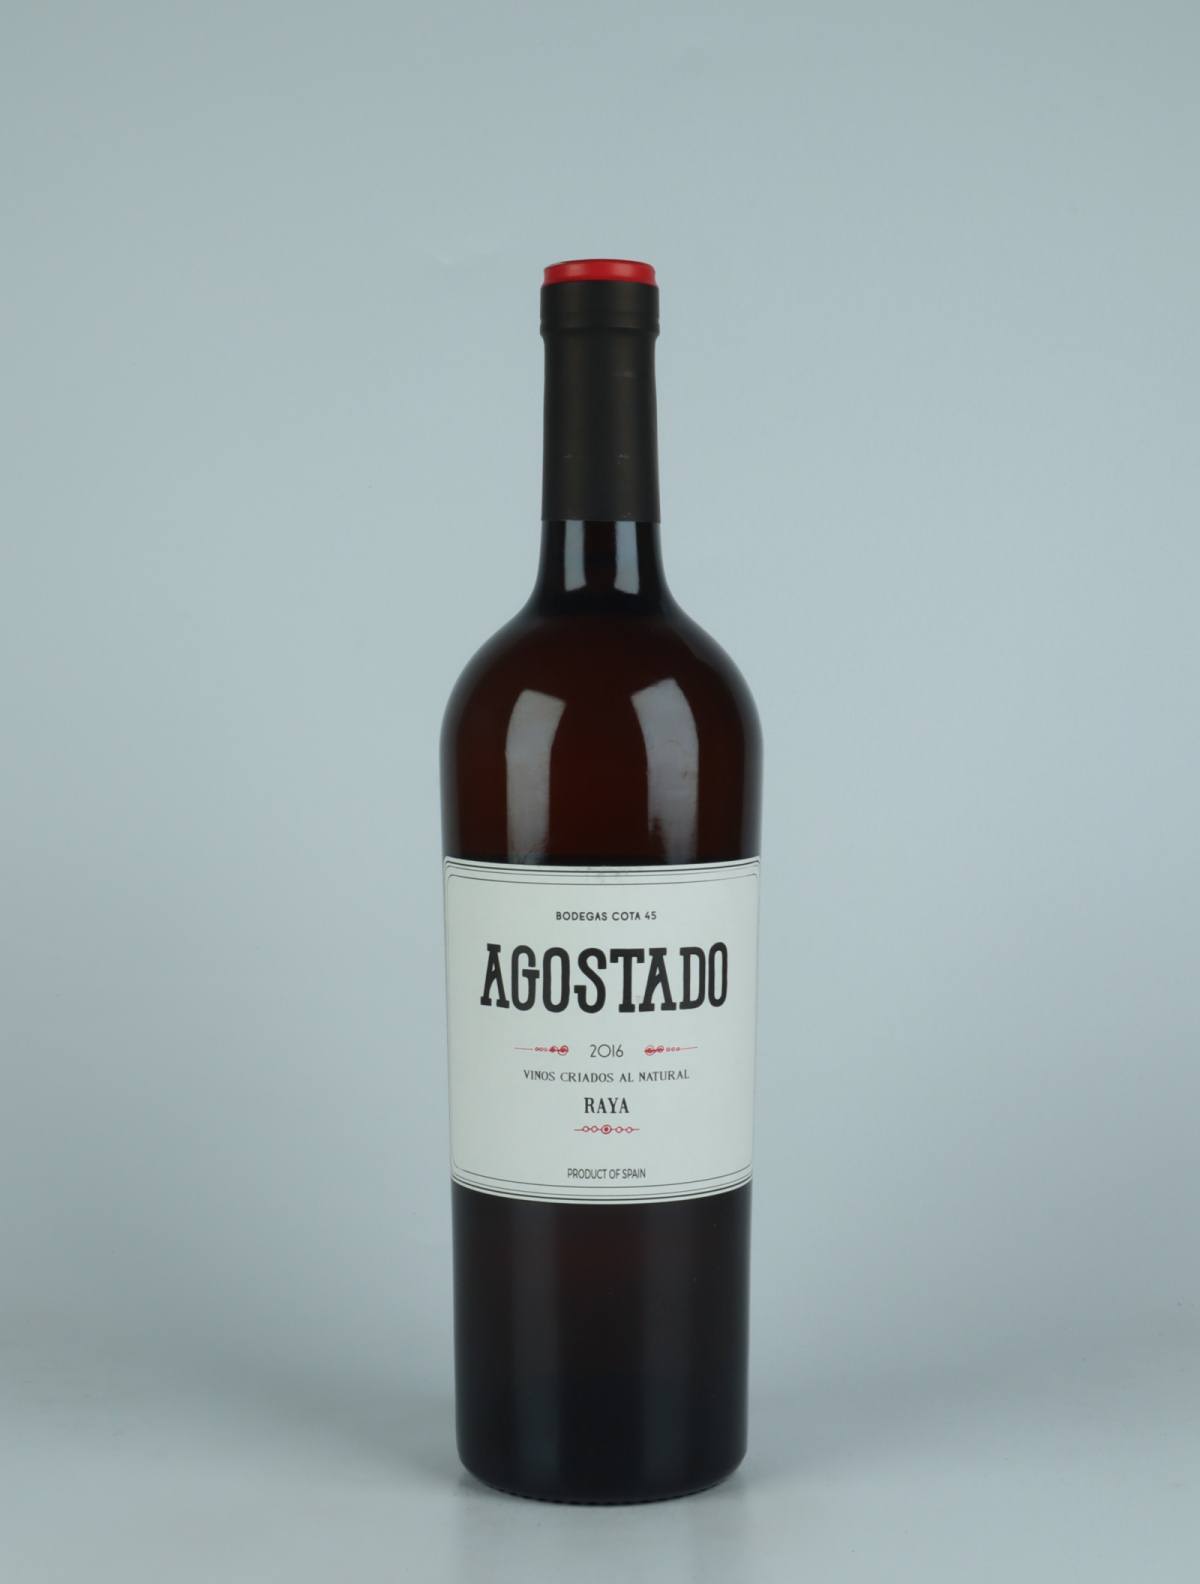 A bottle 2016 Agostado Raya Olorosa White wine from Bodegas Cota 45, Andalucia in Spain